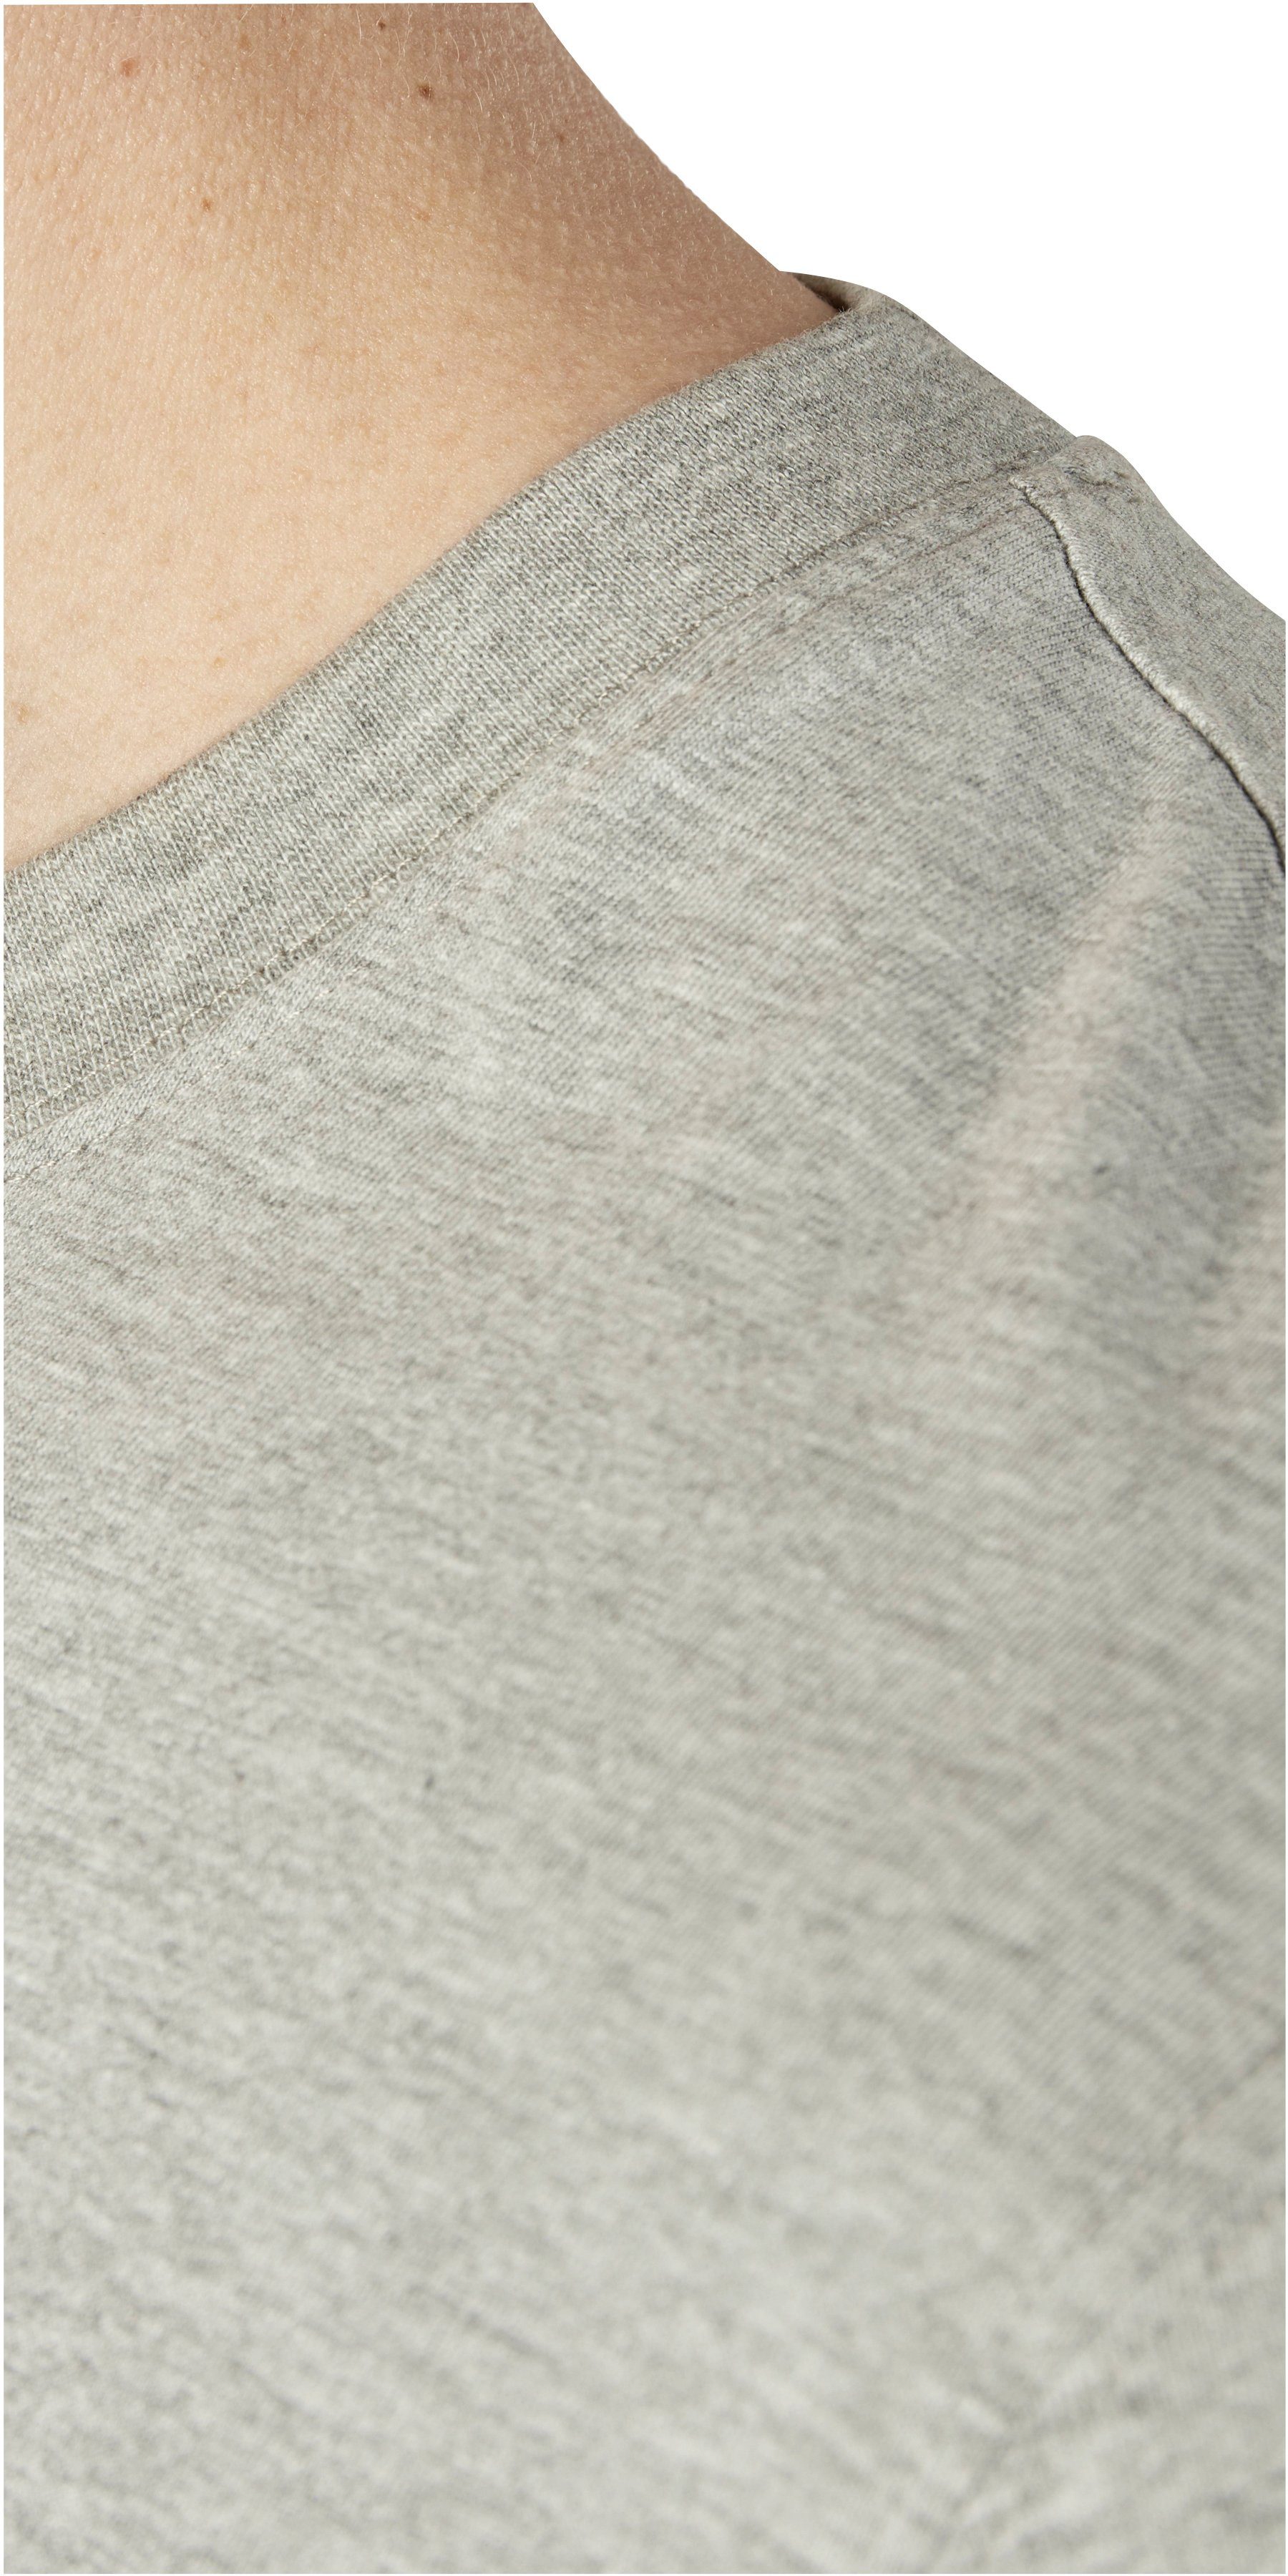 Dickies T-Shirt aus 3-tlg) (Set, Rutland-Graphic Baumwolle